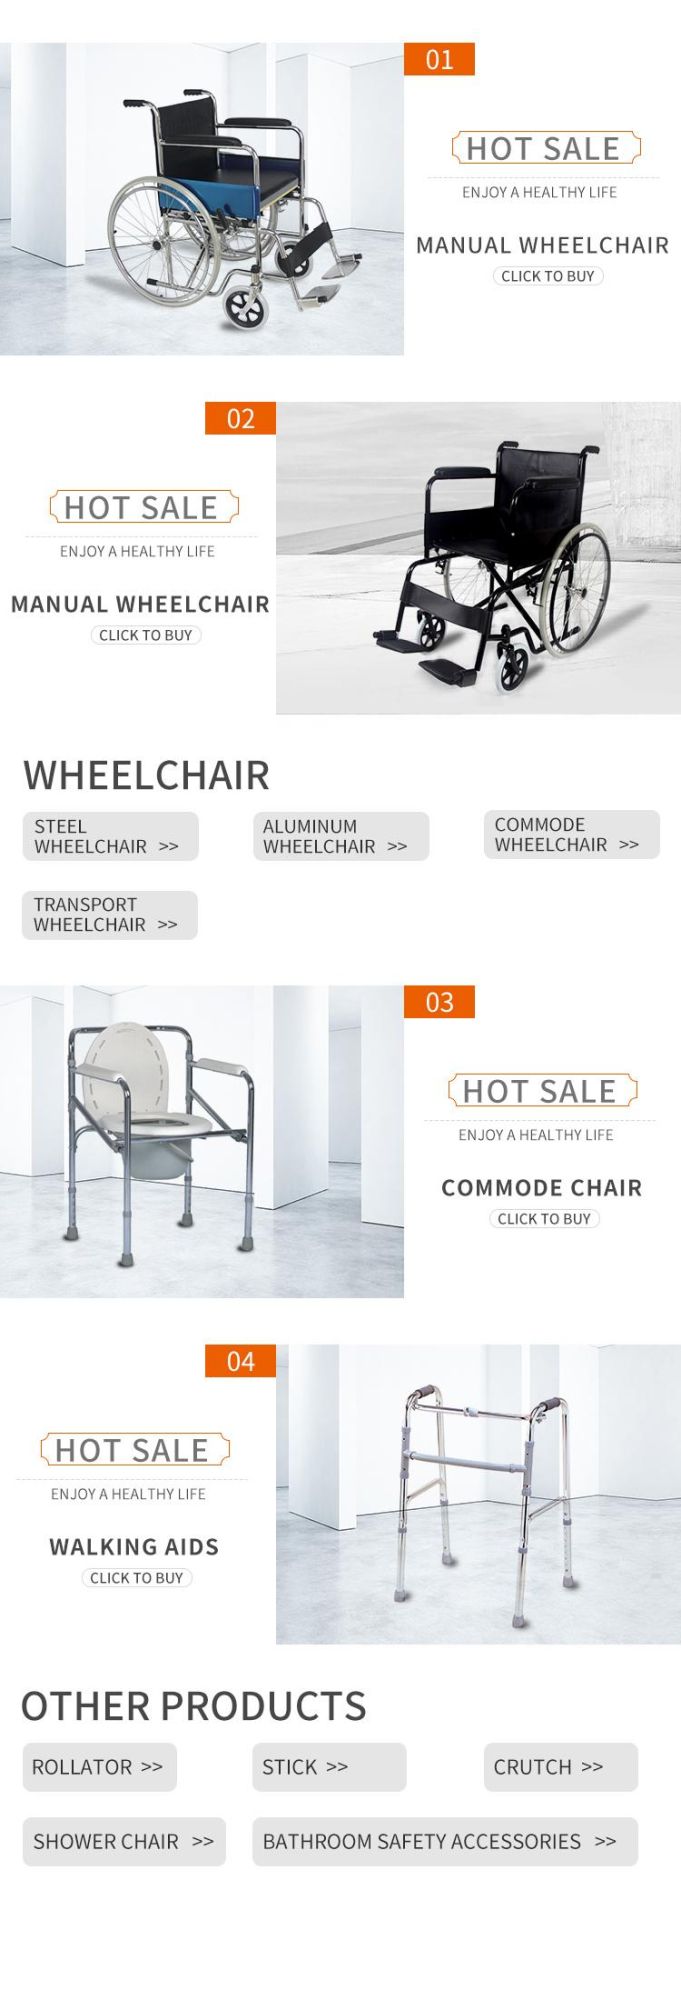 Portable Lightweight Steel Manual Wheelchair